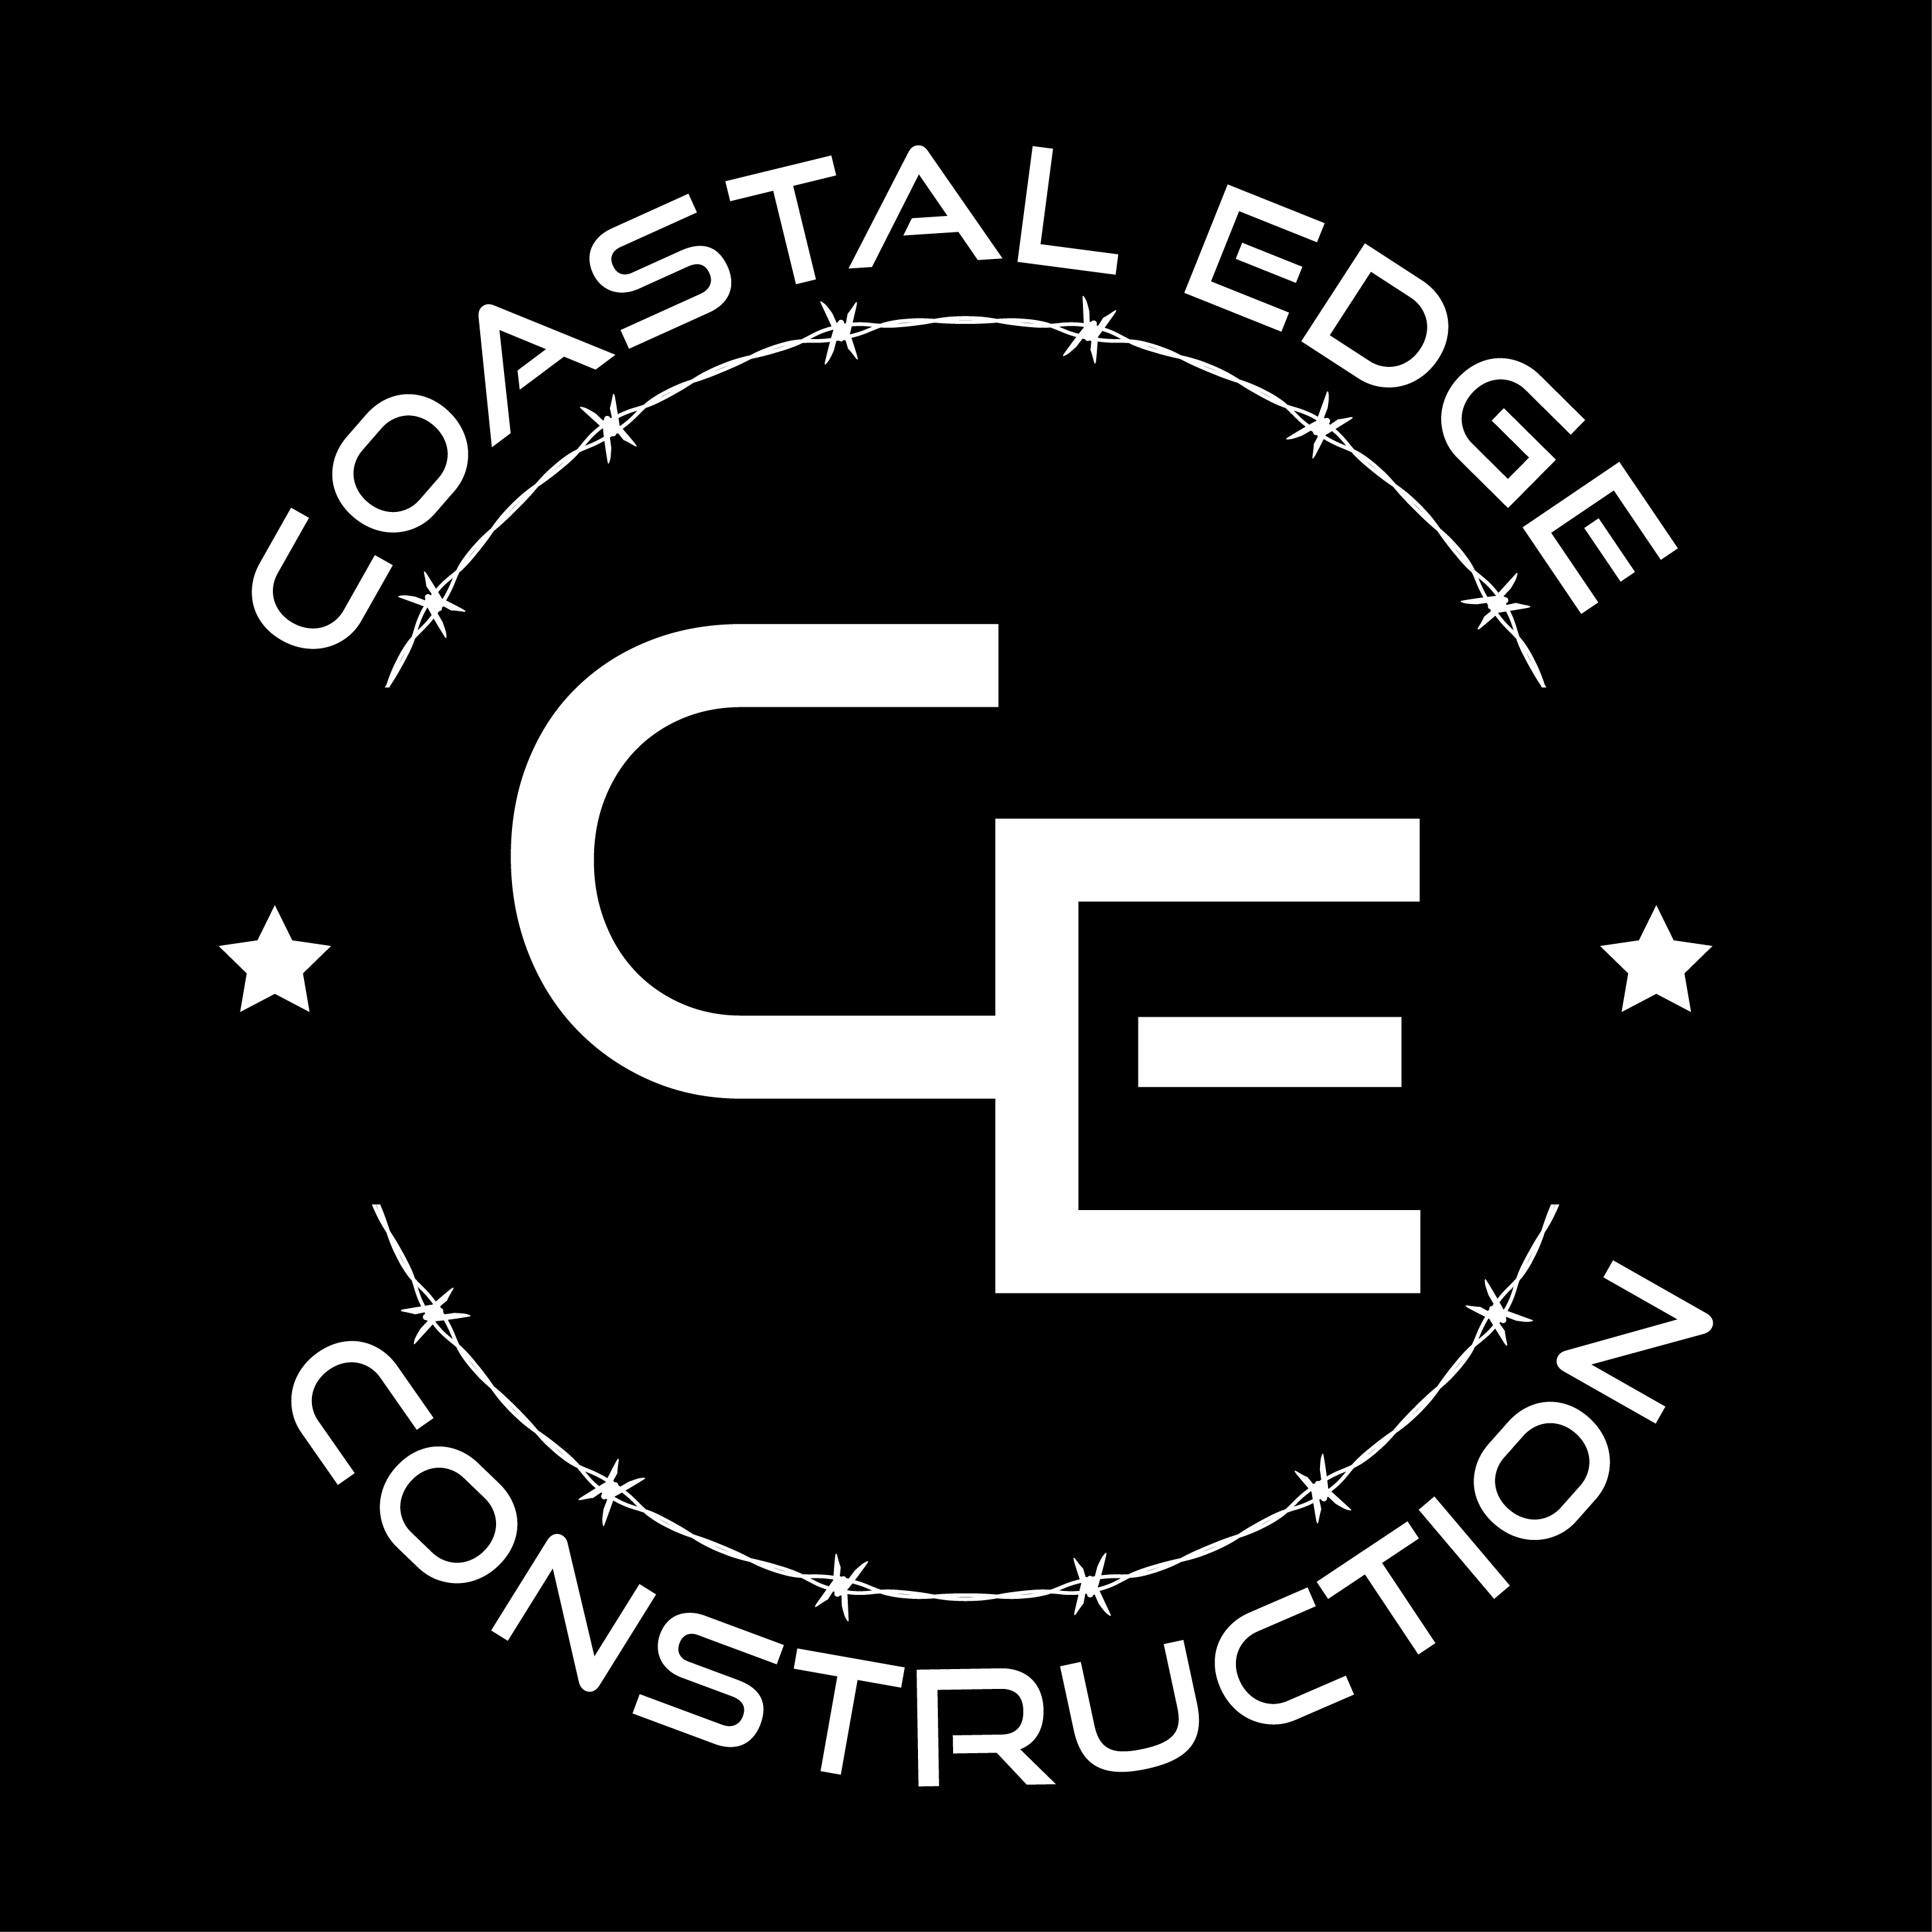 Coastal Edge Construction Logo